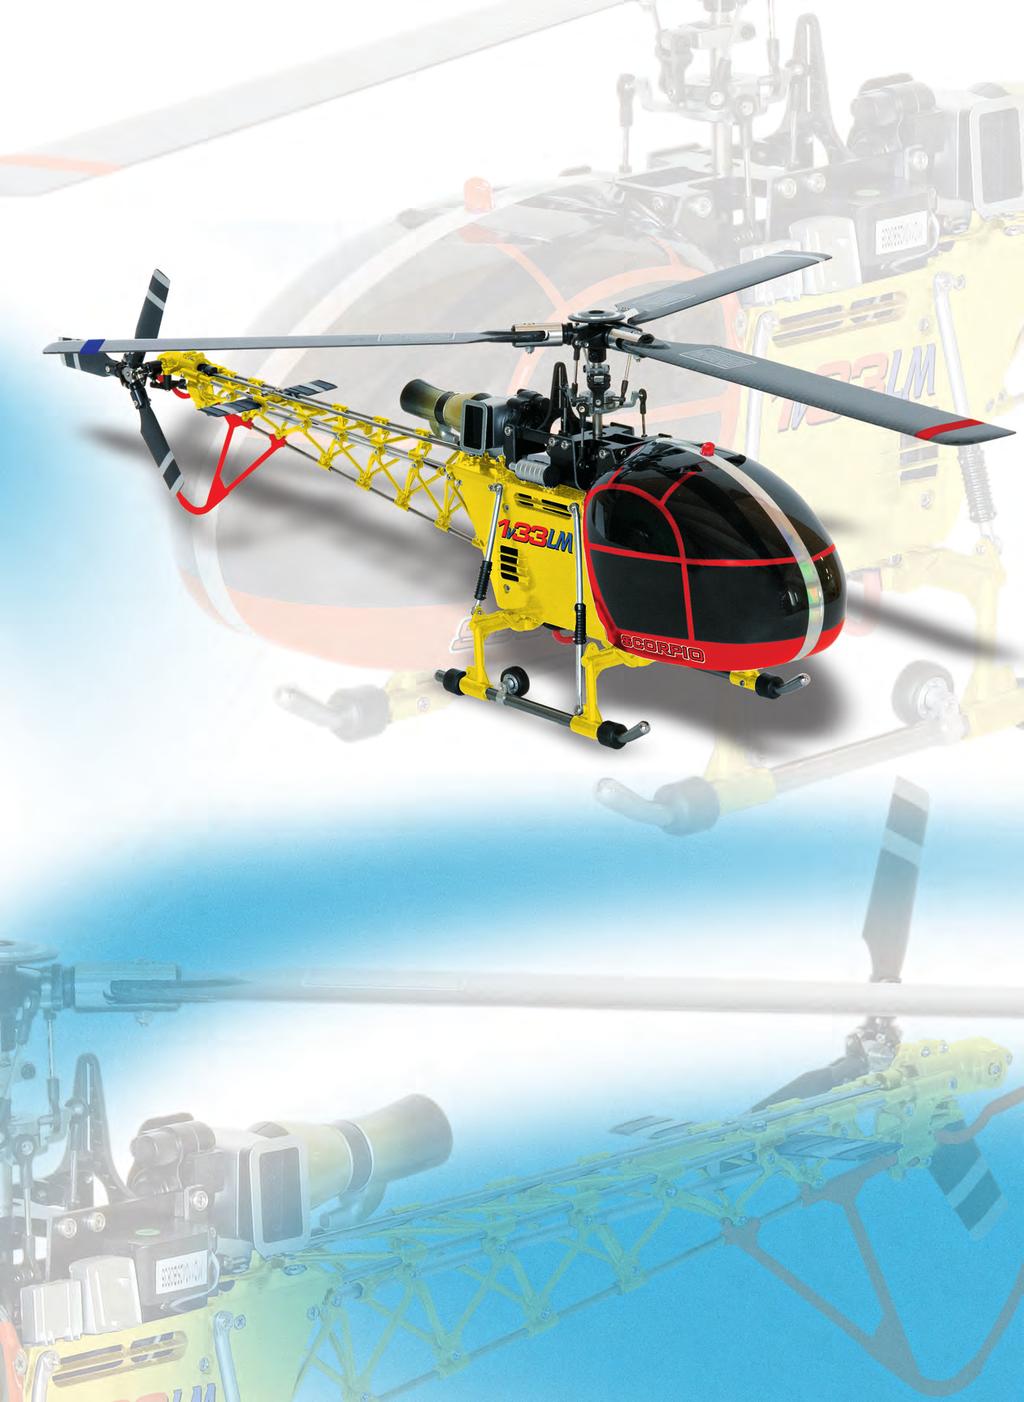 1V33 Lama Helikopter/Senderpult Dreiblatt-Helikopter, Flybarless, Brushless, in Superscale-Ausführung Dieser Helikopter ist mit der neuesten 3-Achs-Gyro-Generation